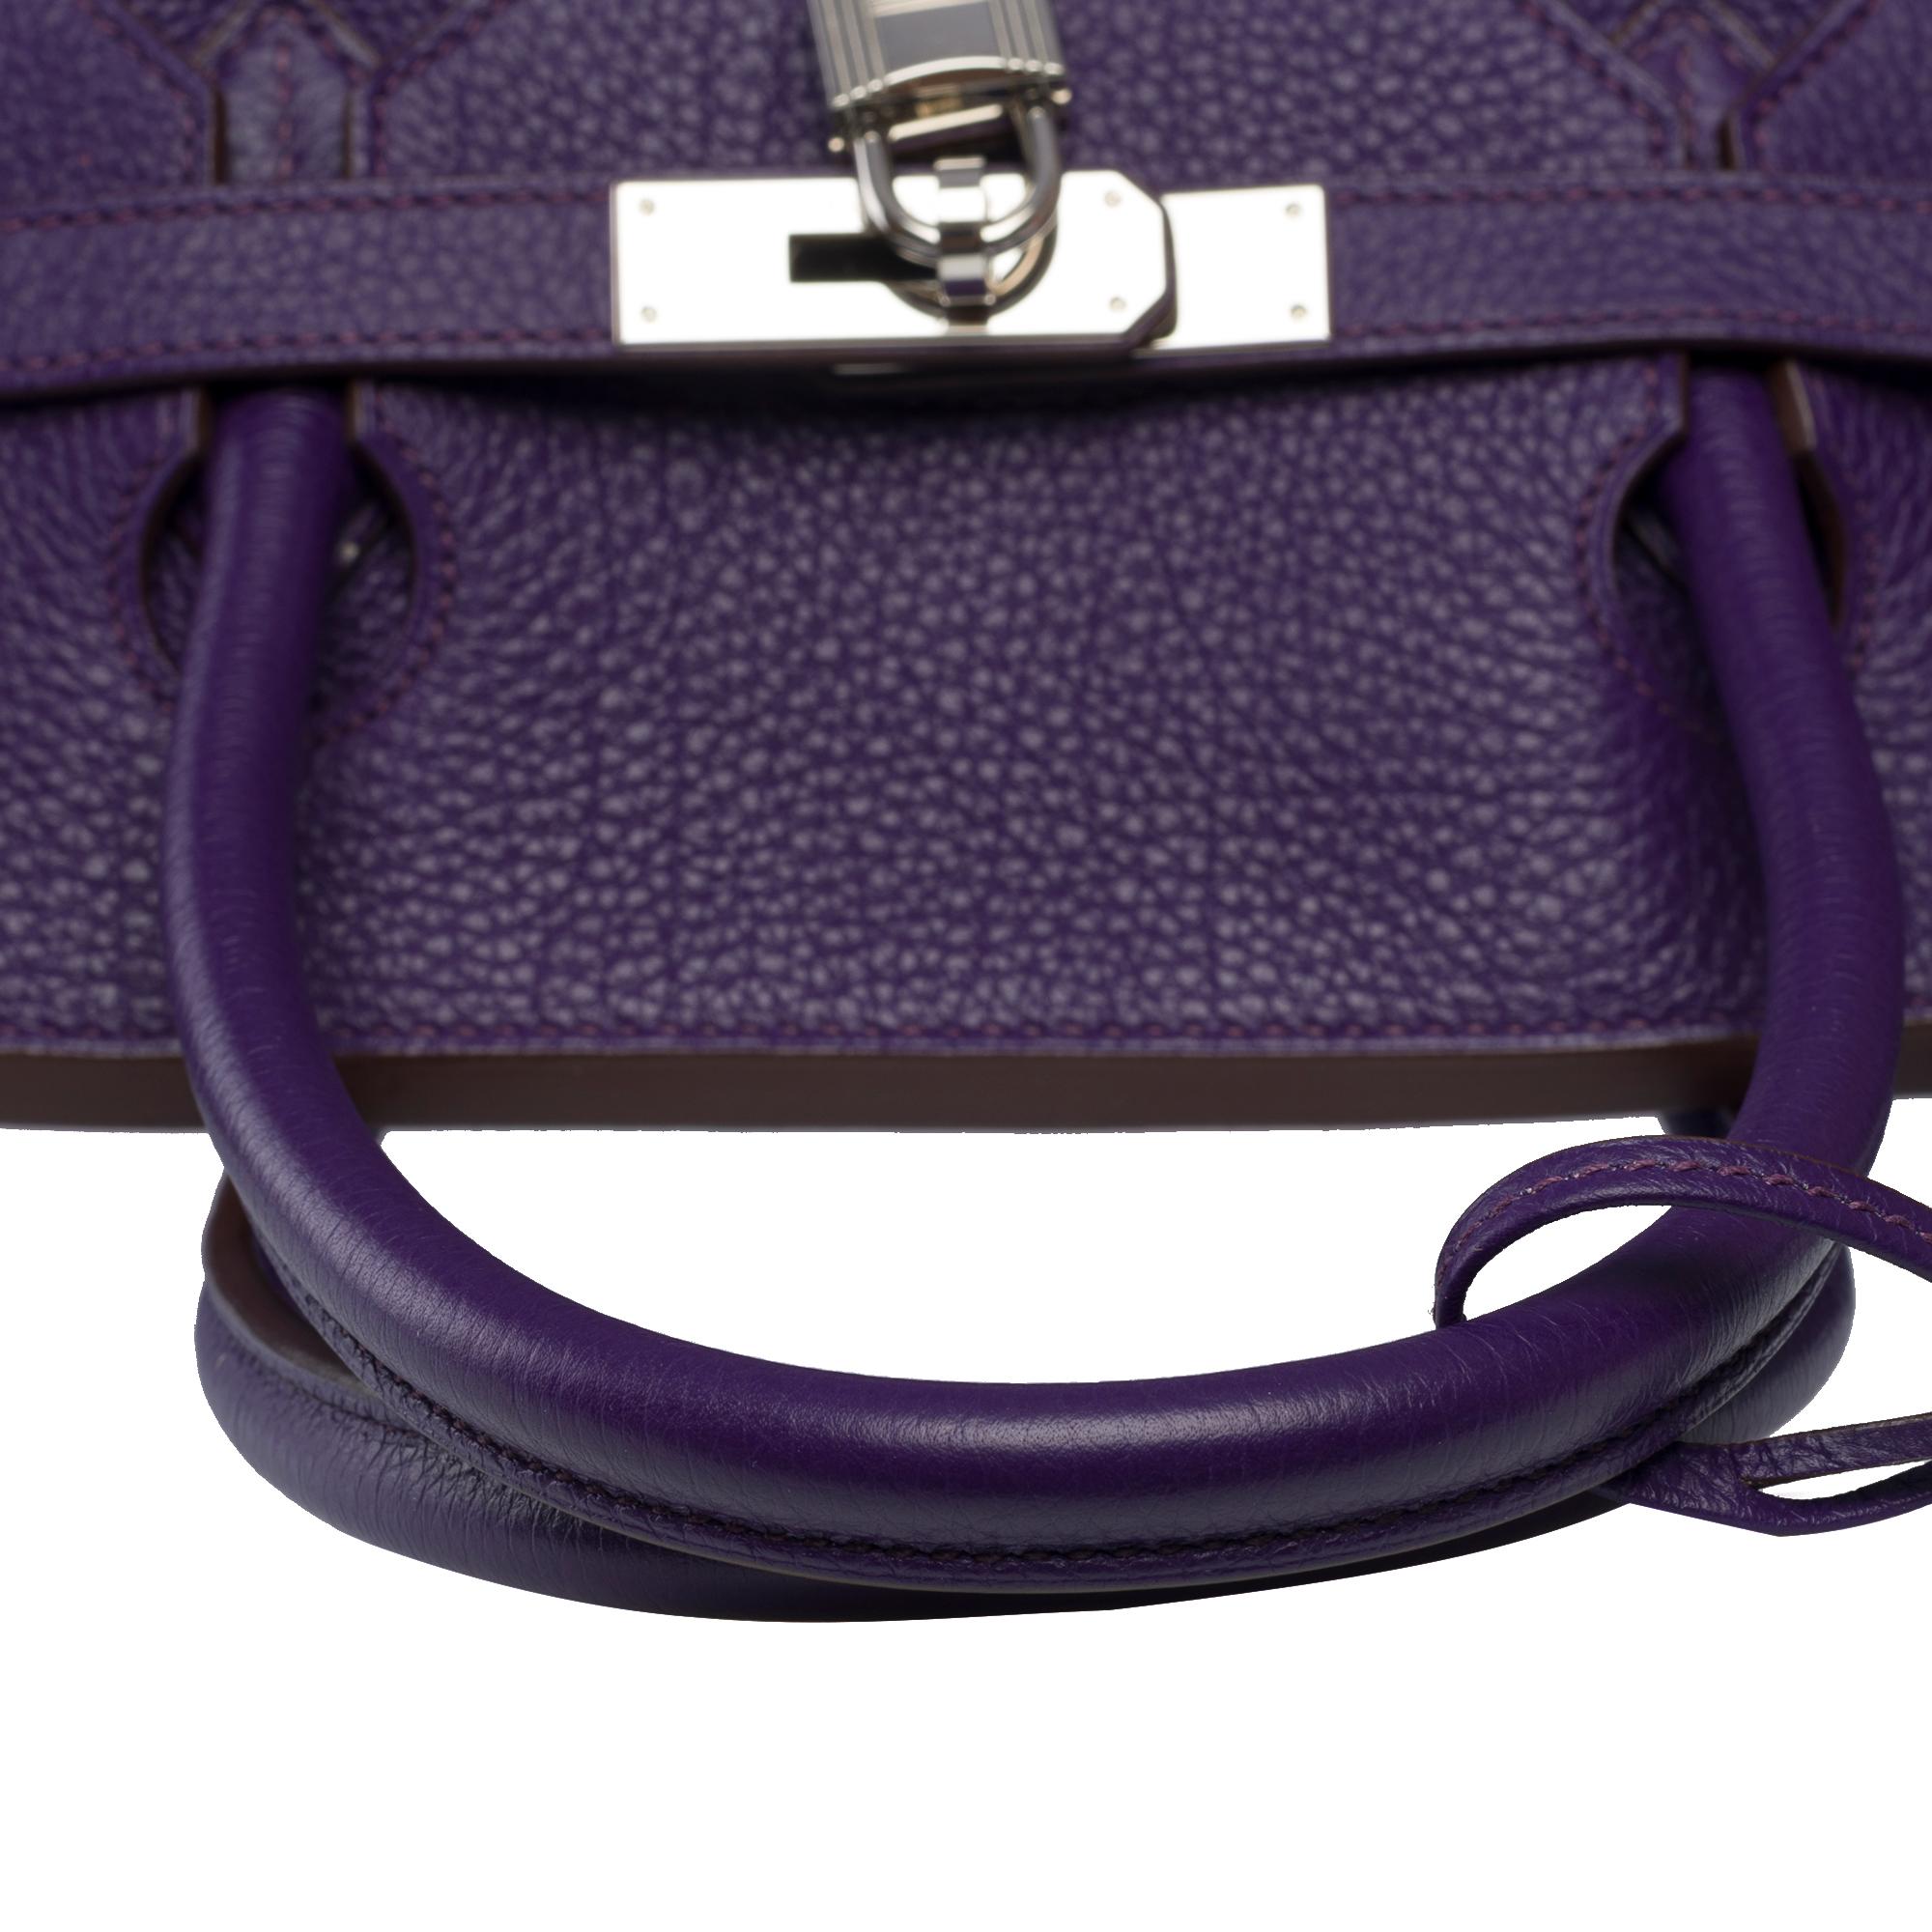 Classy & Rare Hermes Birkin 40 handbag in Iris Purple Togo leather, SHW 5